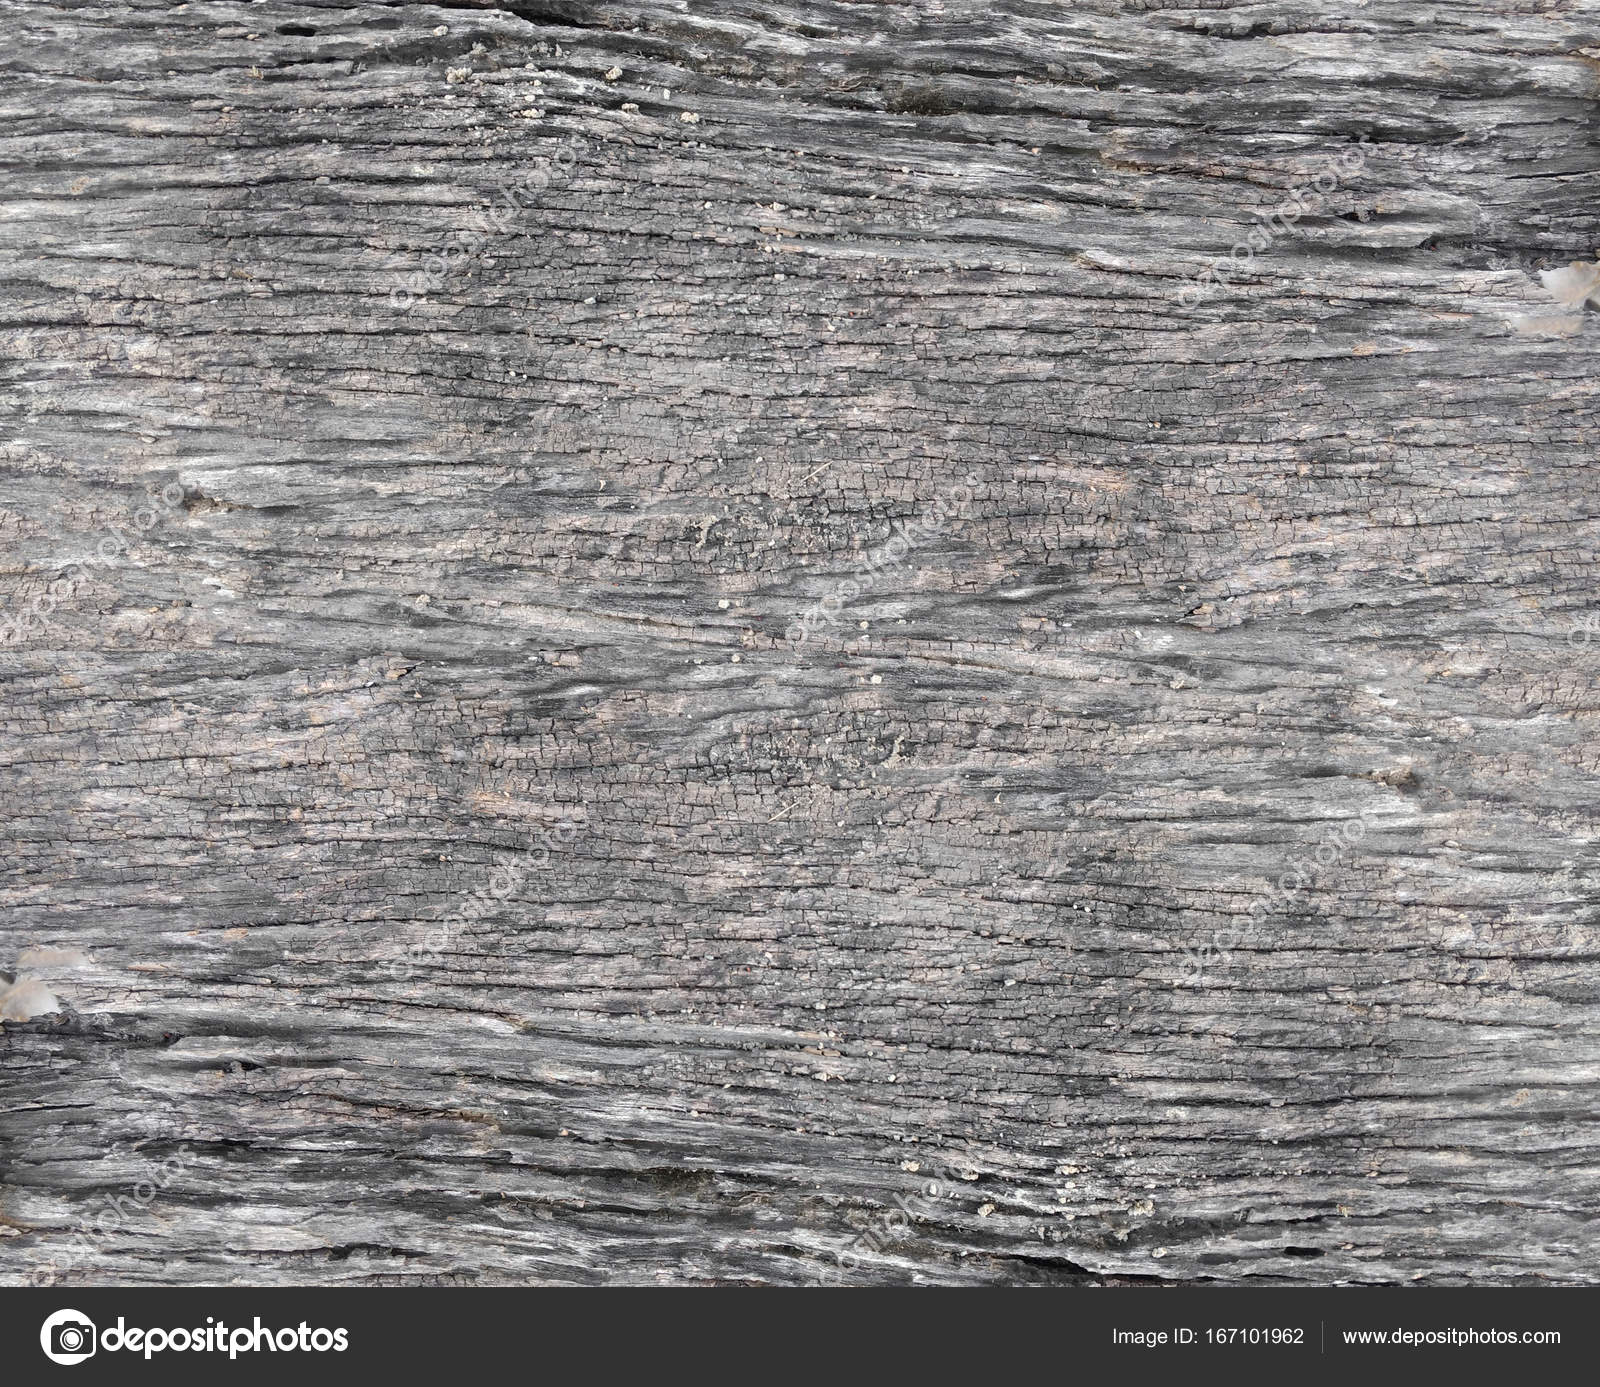 grunge rust wooden texture — Stock Photo © thawornnulove #167101962